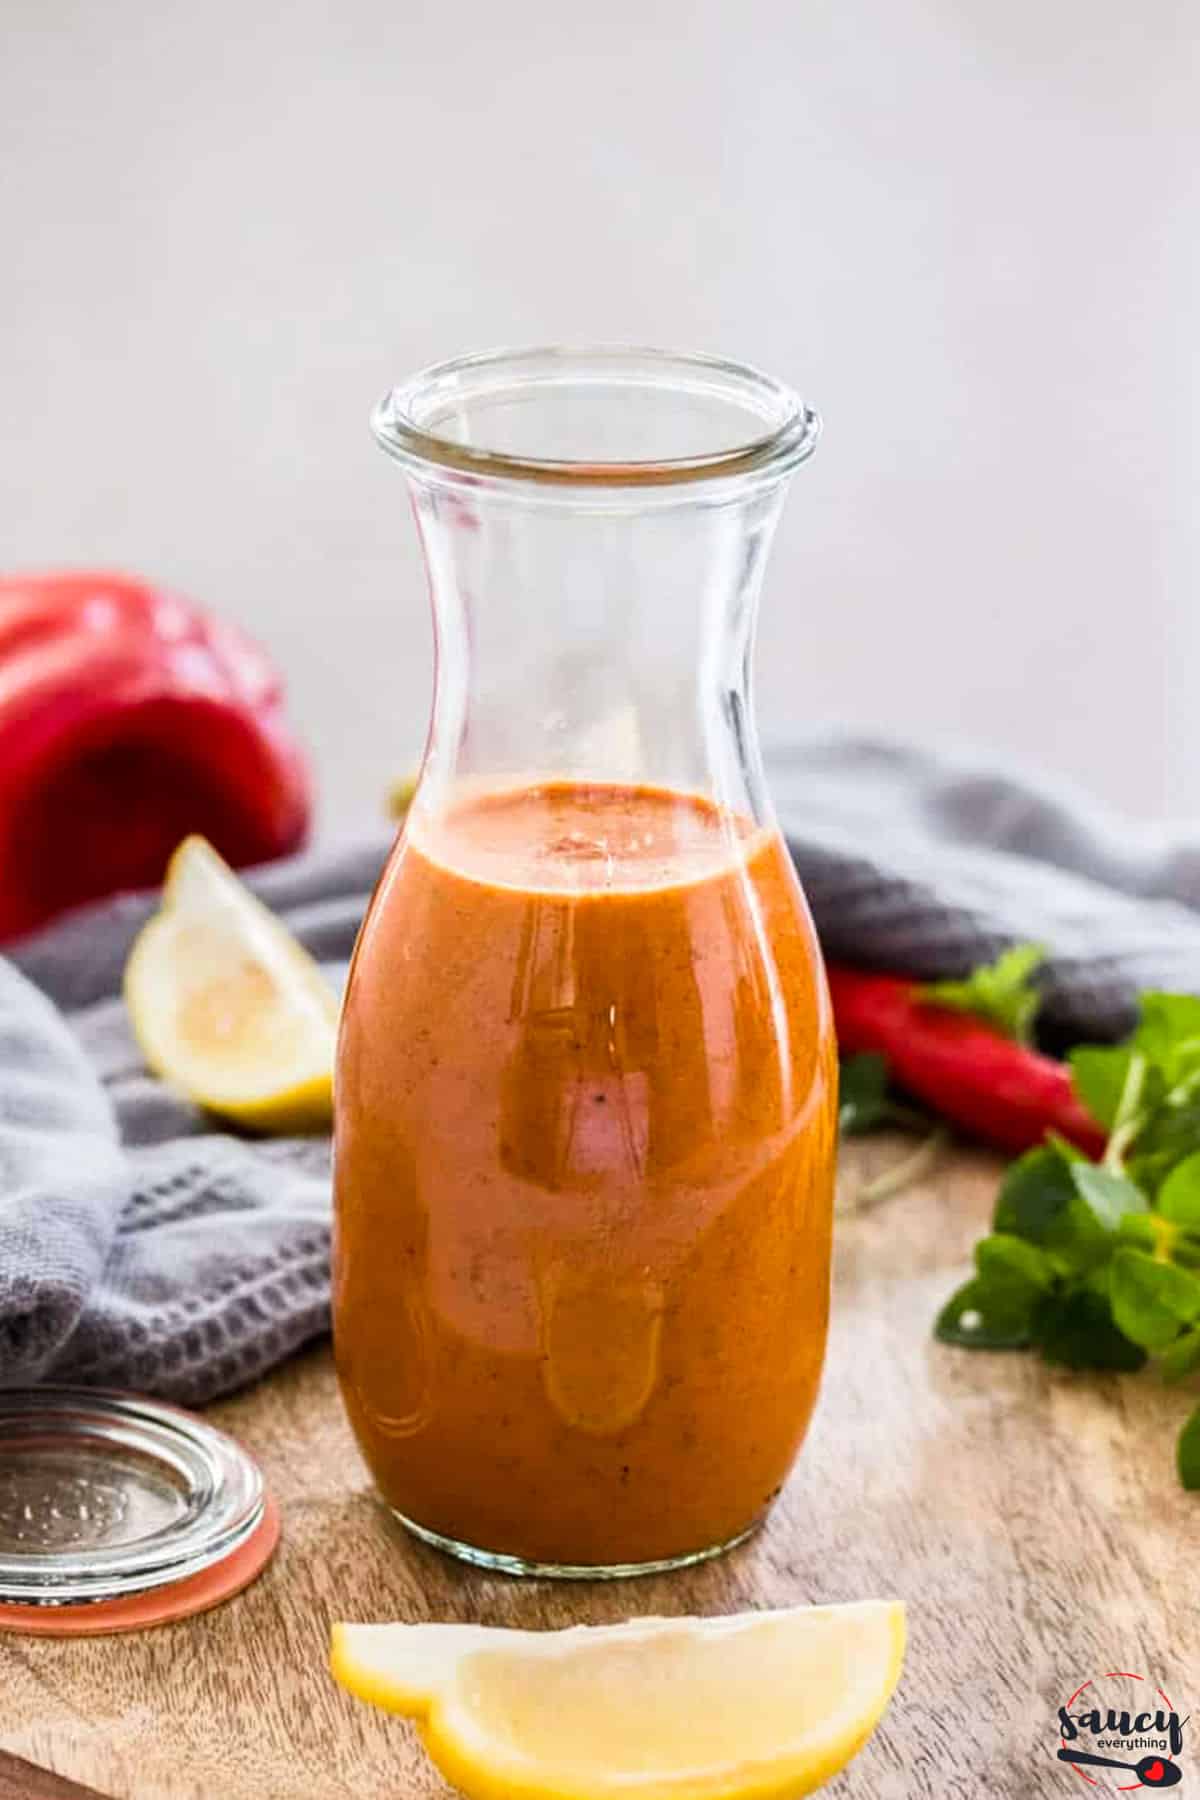 Peri peri sauce in a bottle near lemon slices